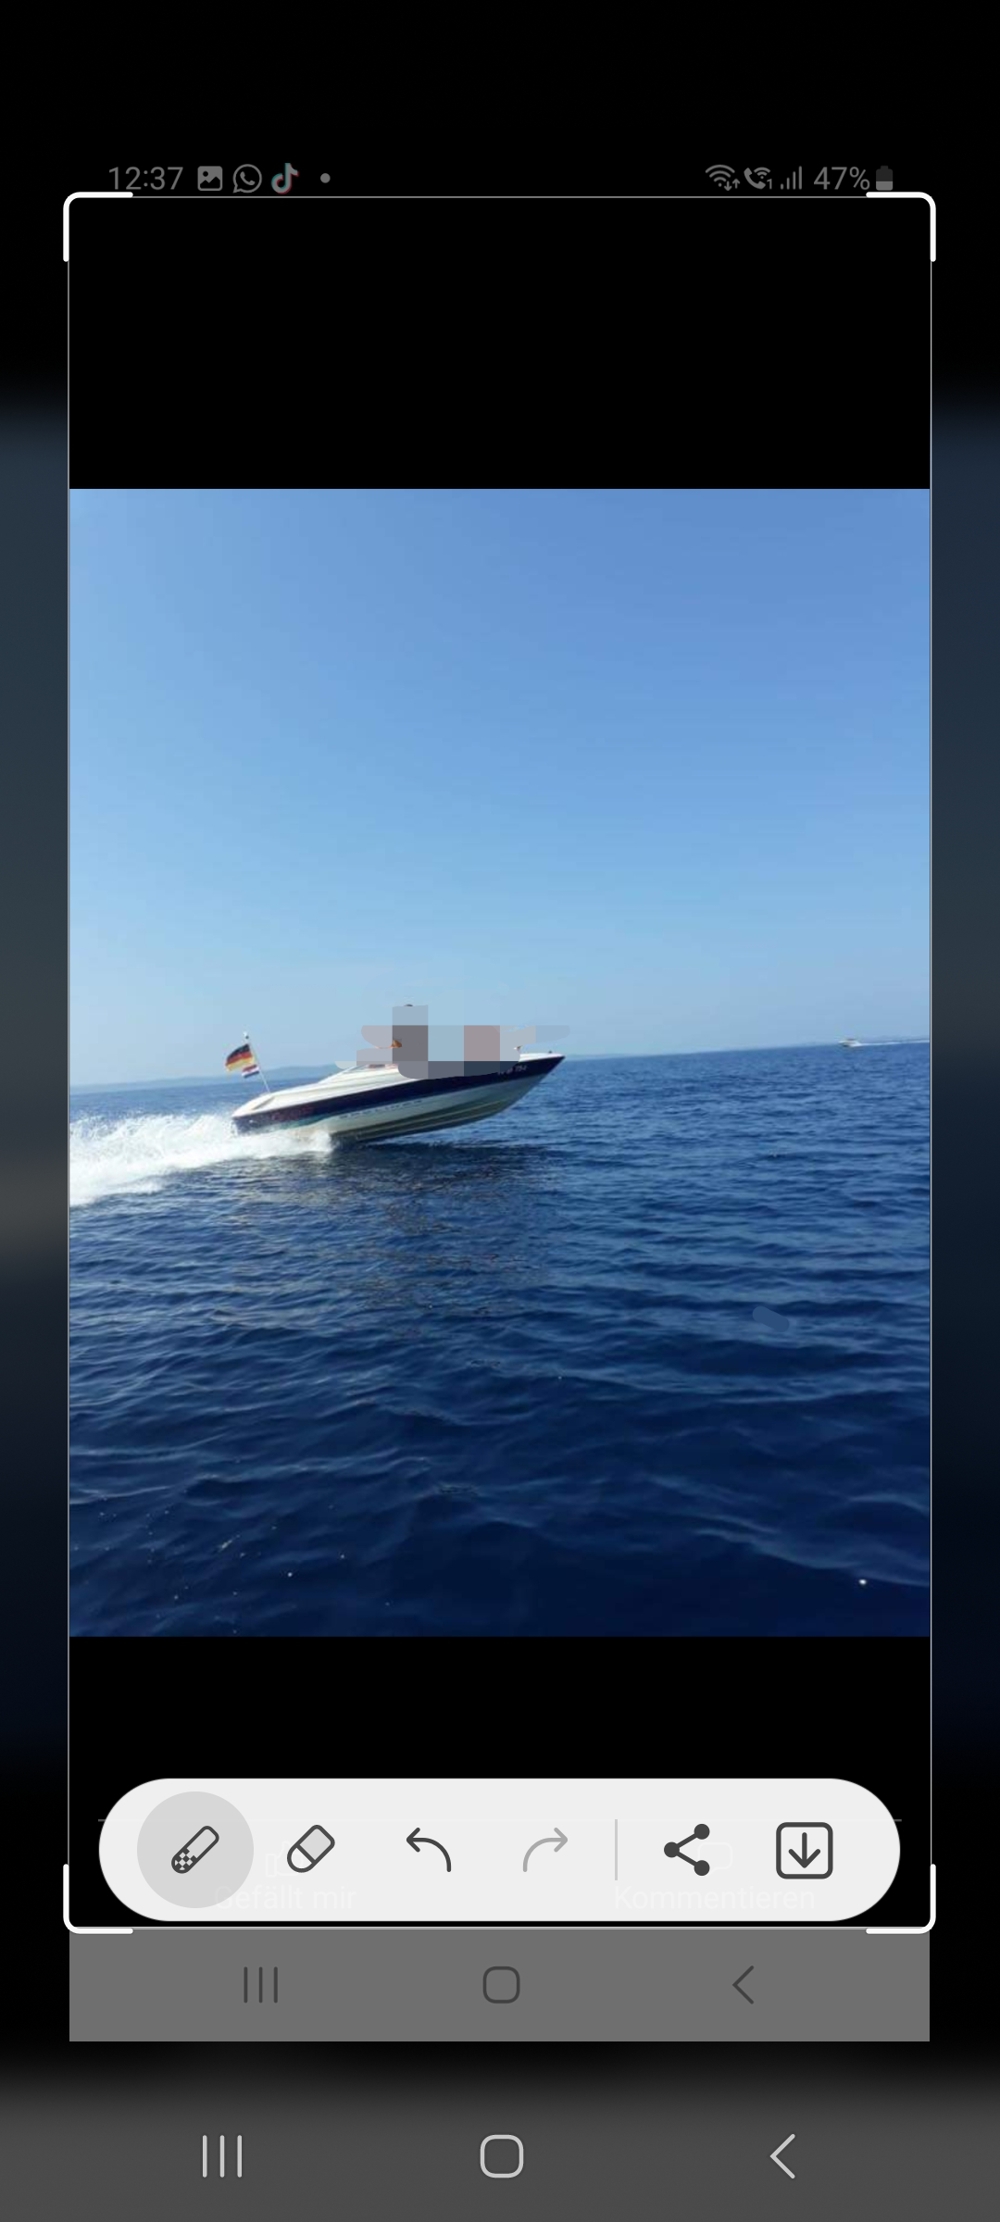 Sportboot Bayliner Capri